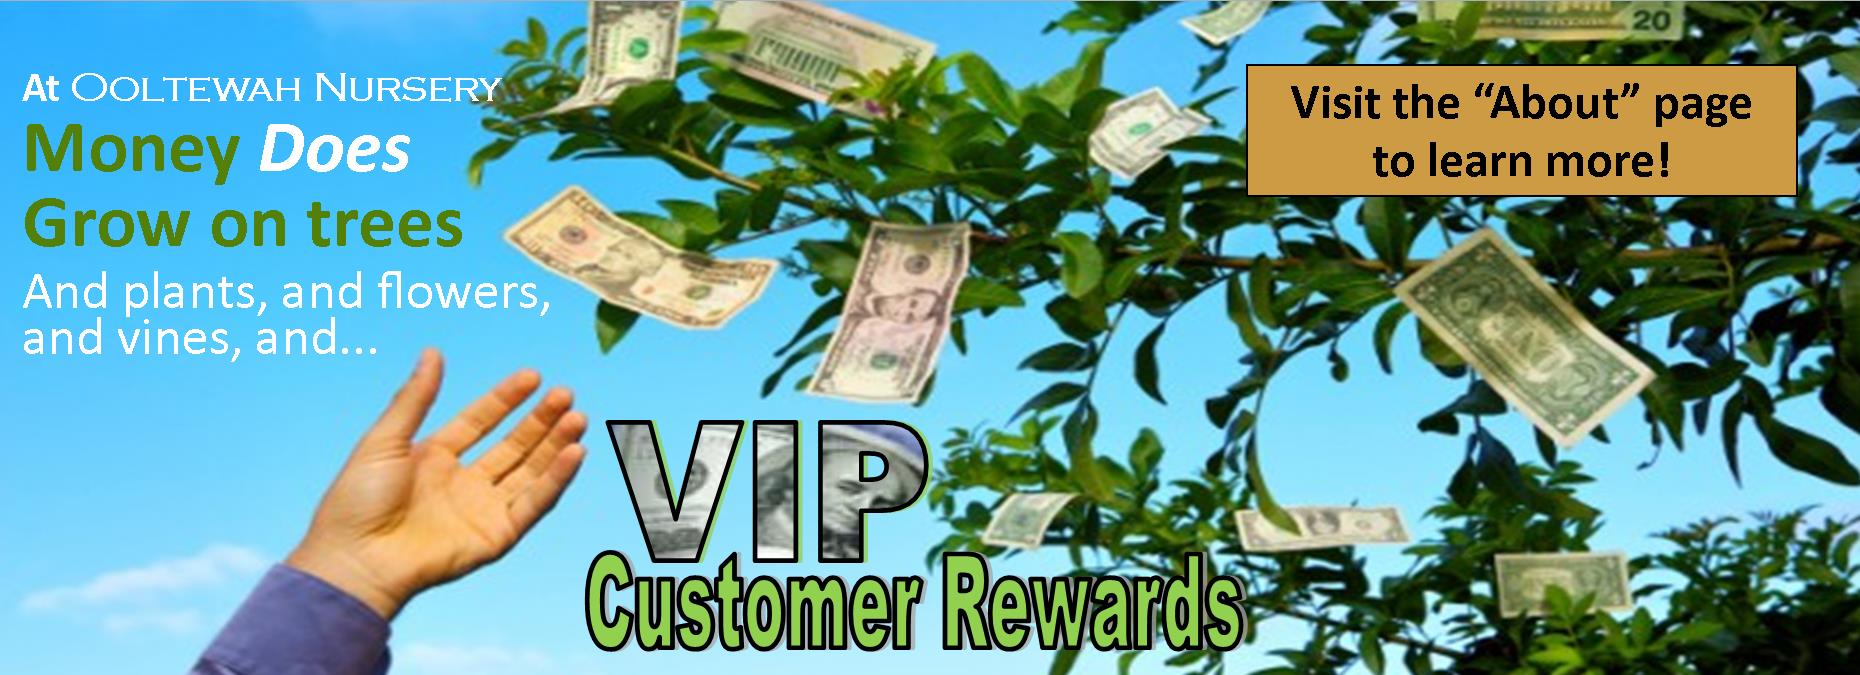 assets/Uploads/VIP-Rewards20.jpg